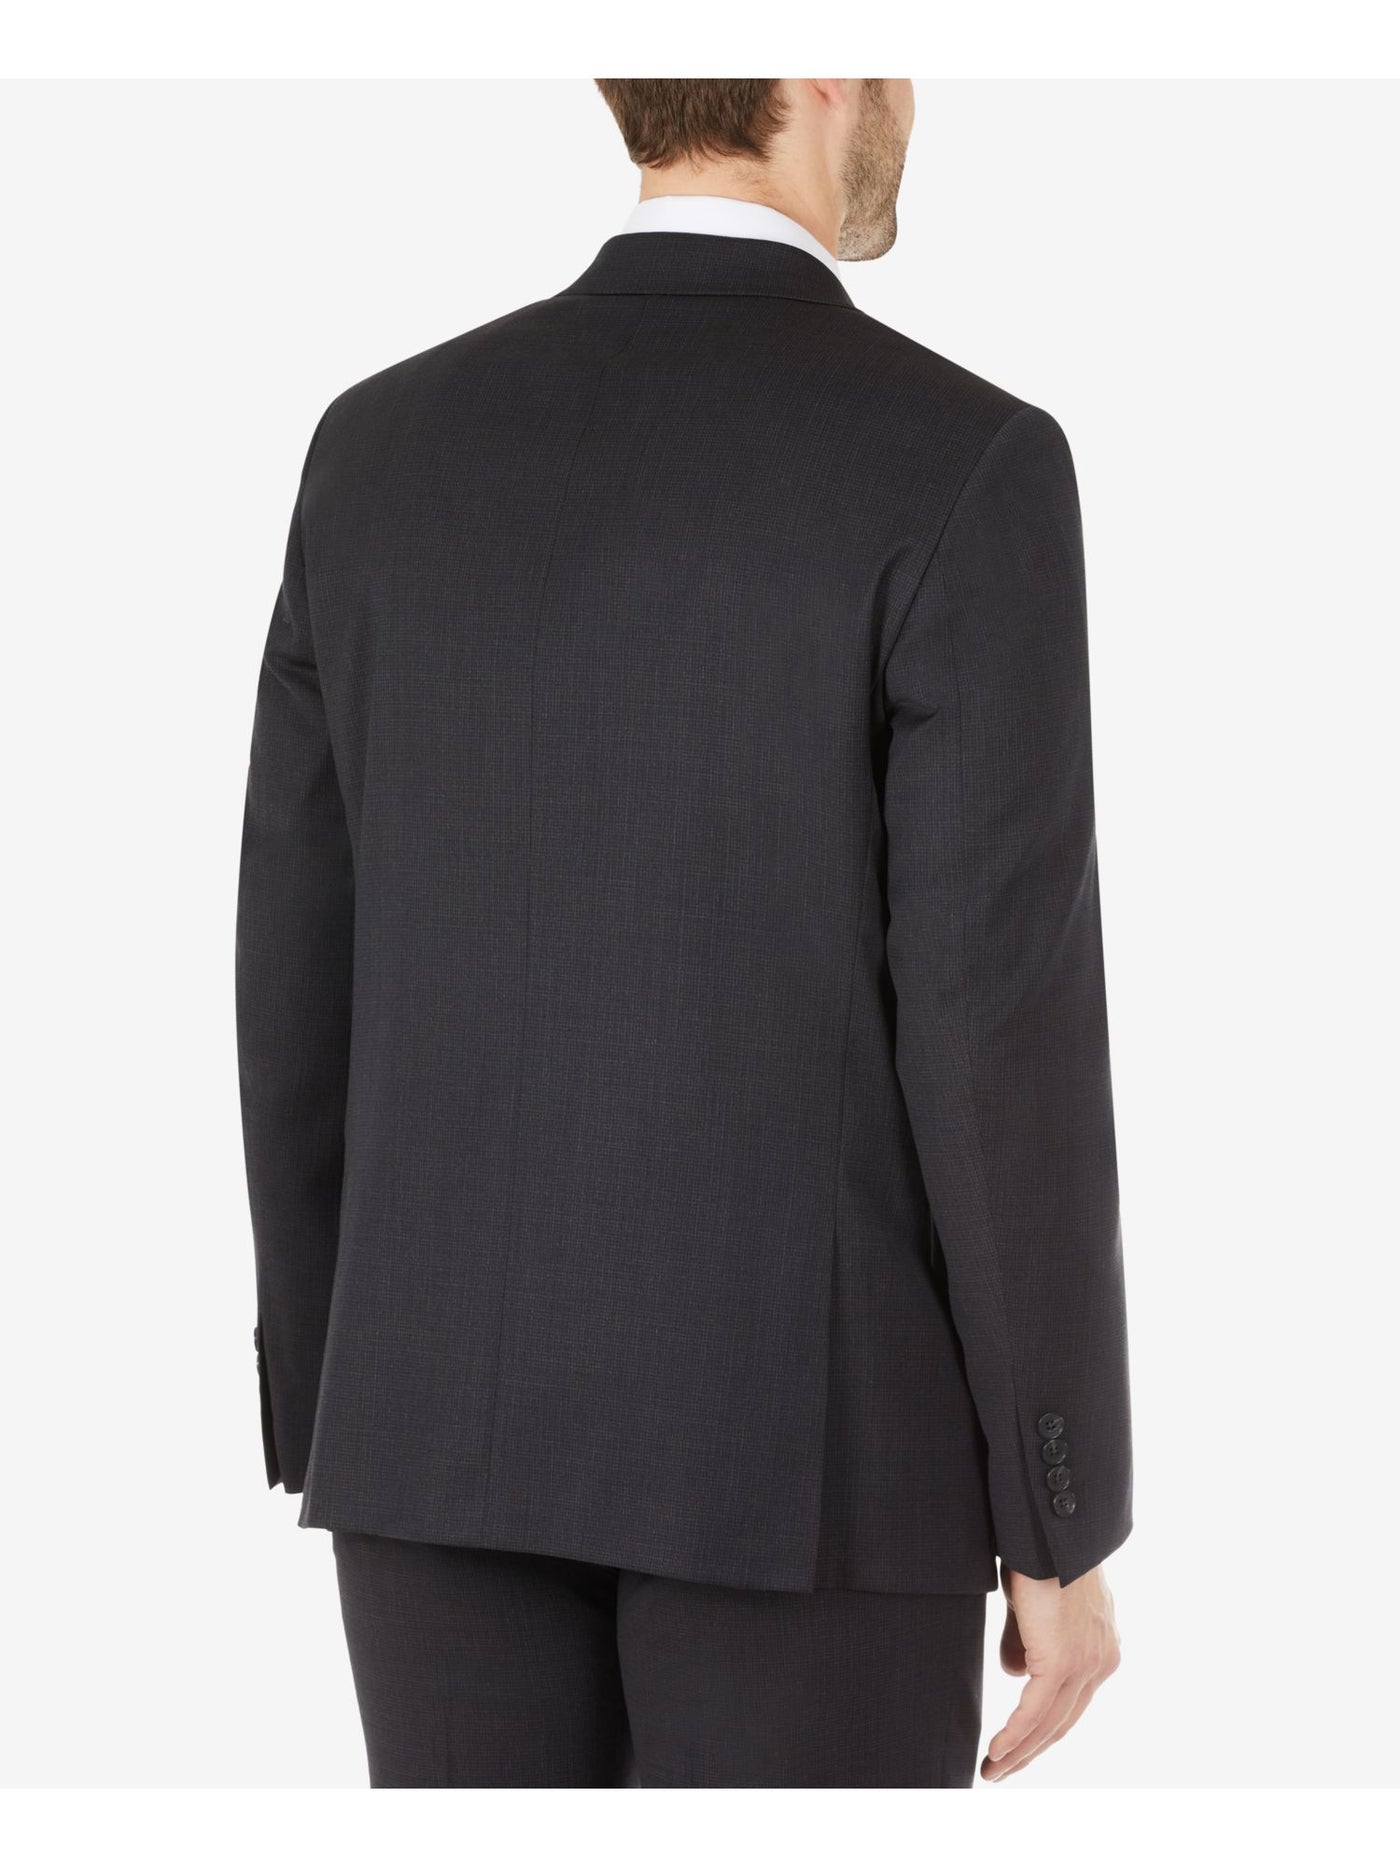 CALVIN KLEIN Mens Black Single Breasted, Skinny Fit Stretch Suit Blazer 46R